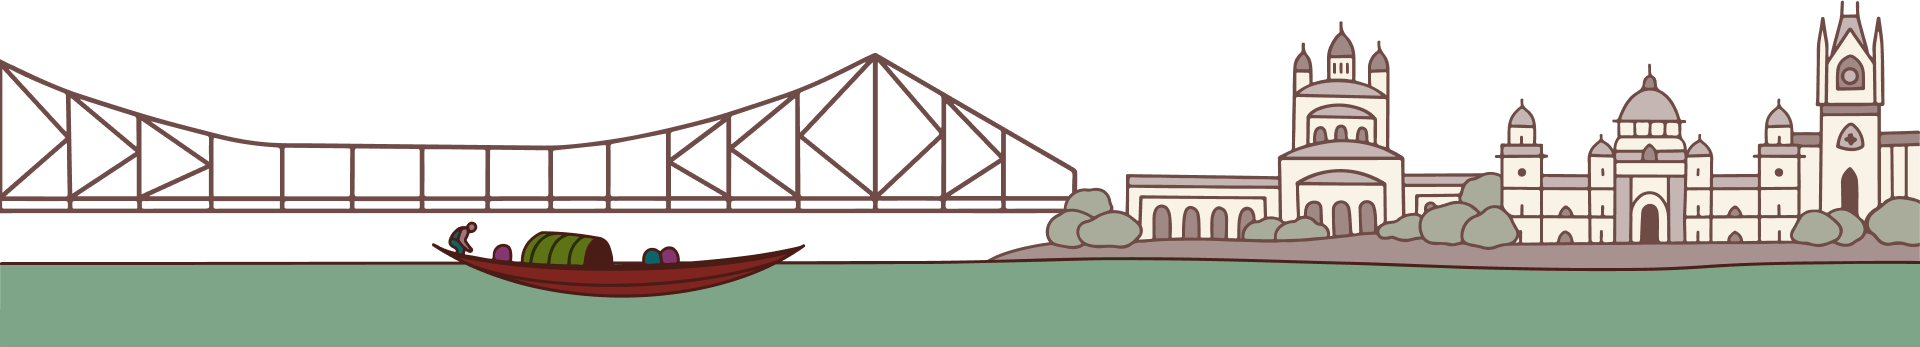 Kolkata Waters illustration